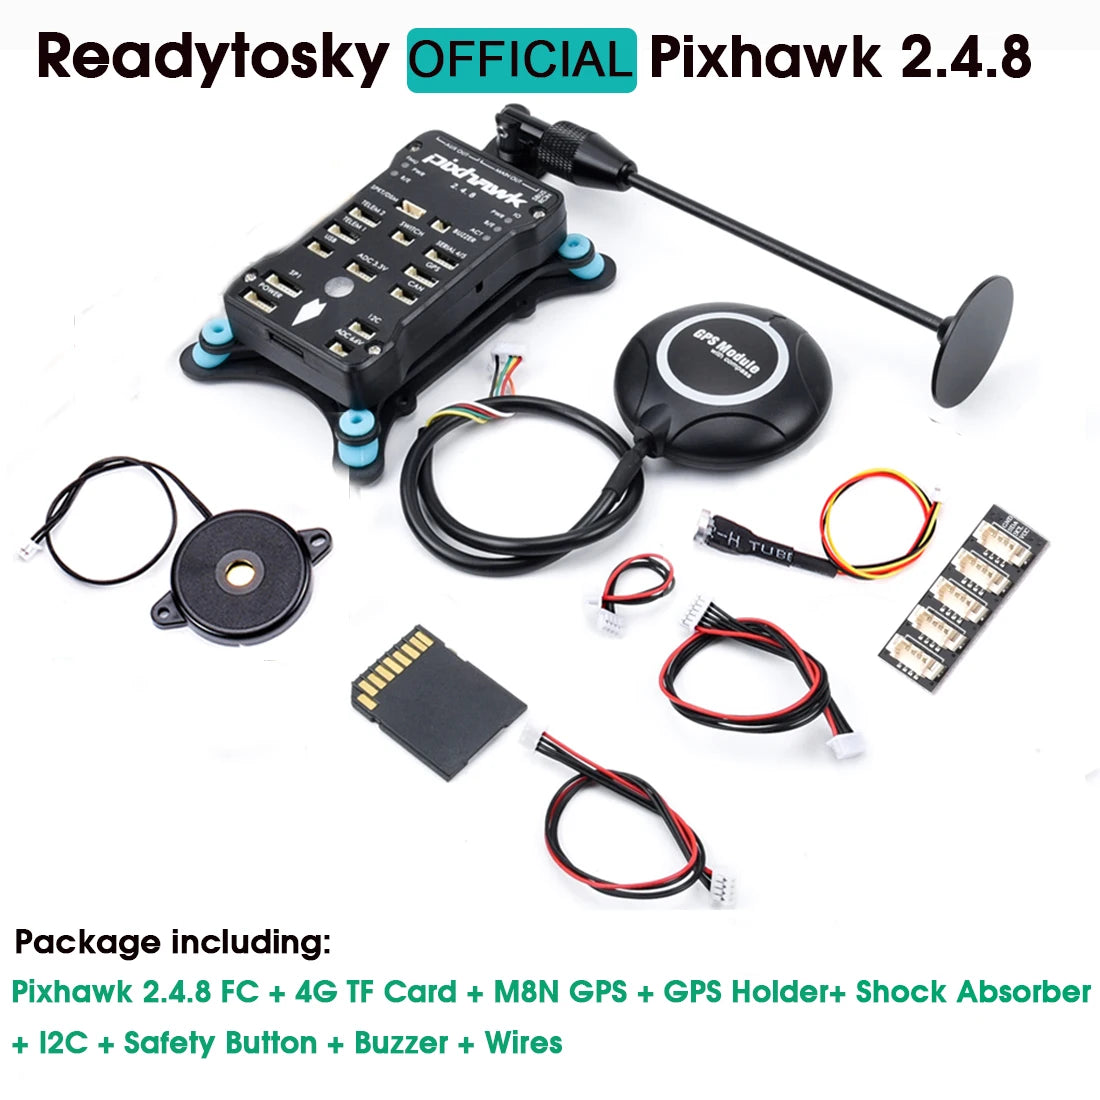 Pixhawk 2.4.8 PX4 PIX 32 Bit Flight Controller, Package includes: Pixhawk 2.4.8 FC + 4G TF Card MBN GPS GPS